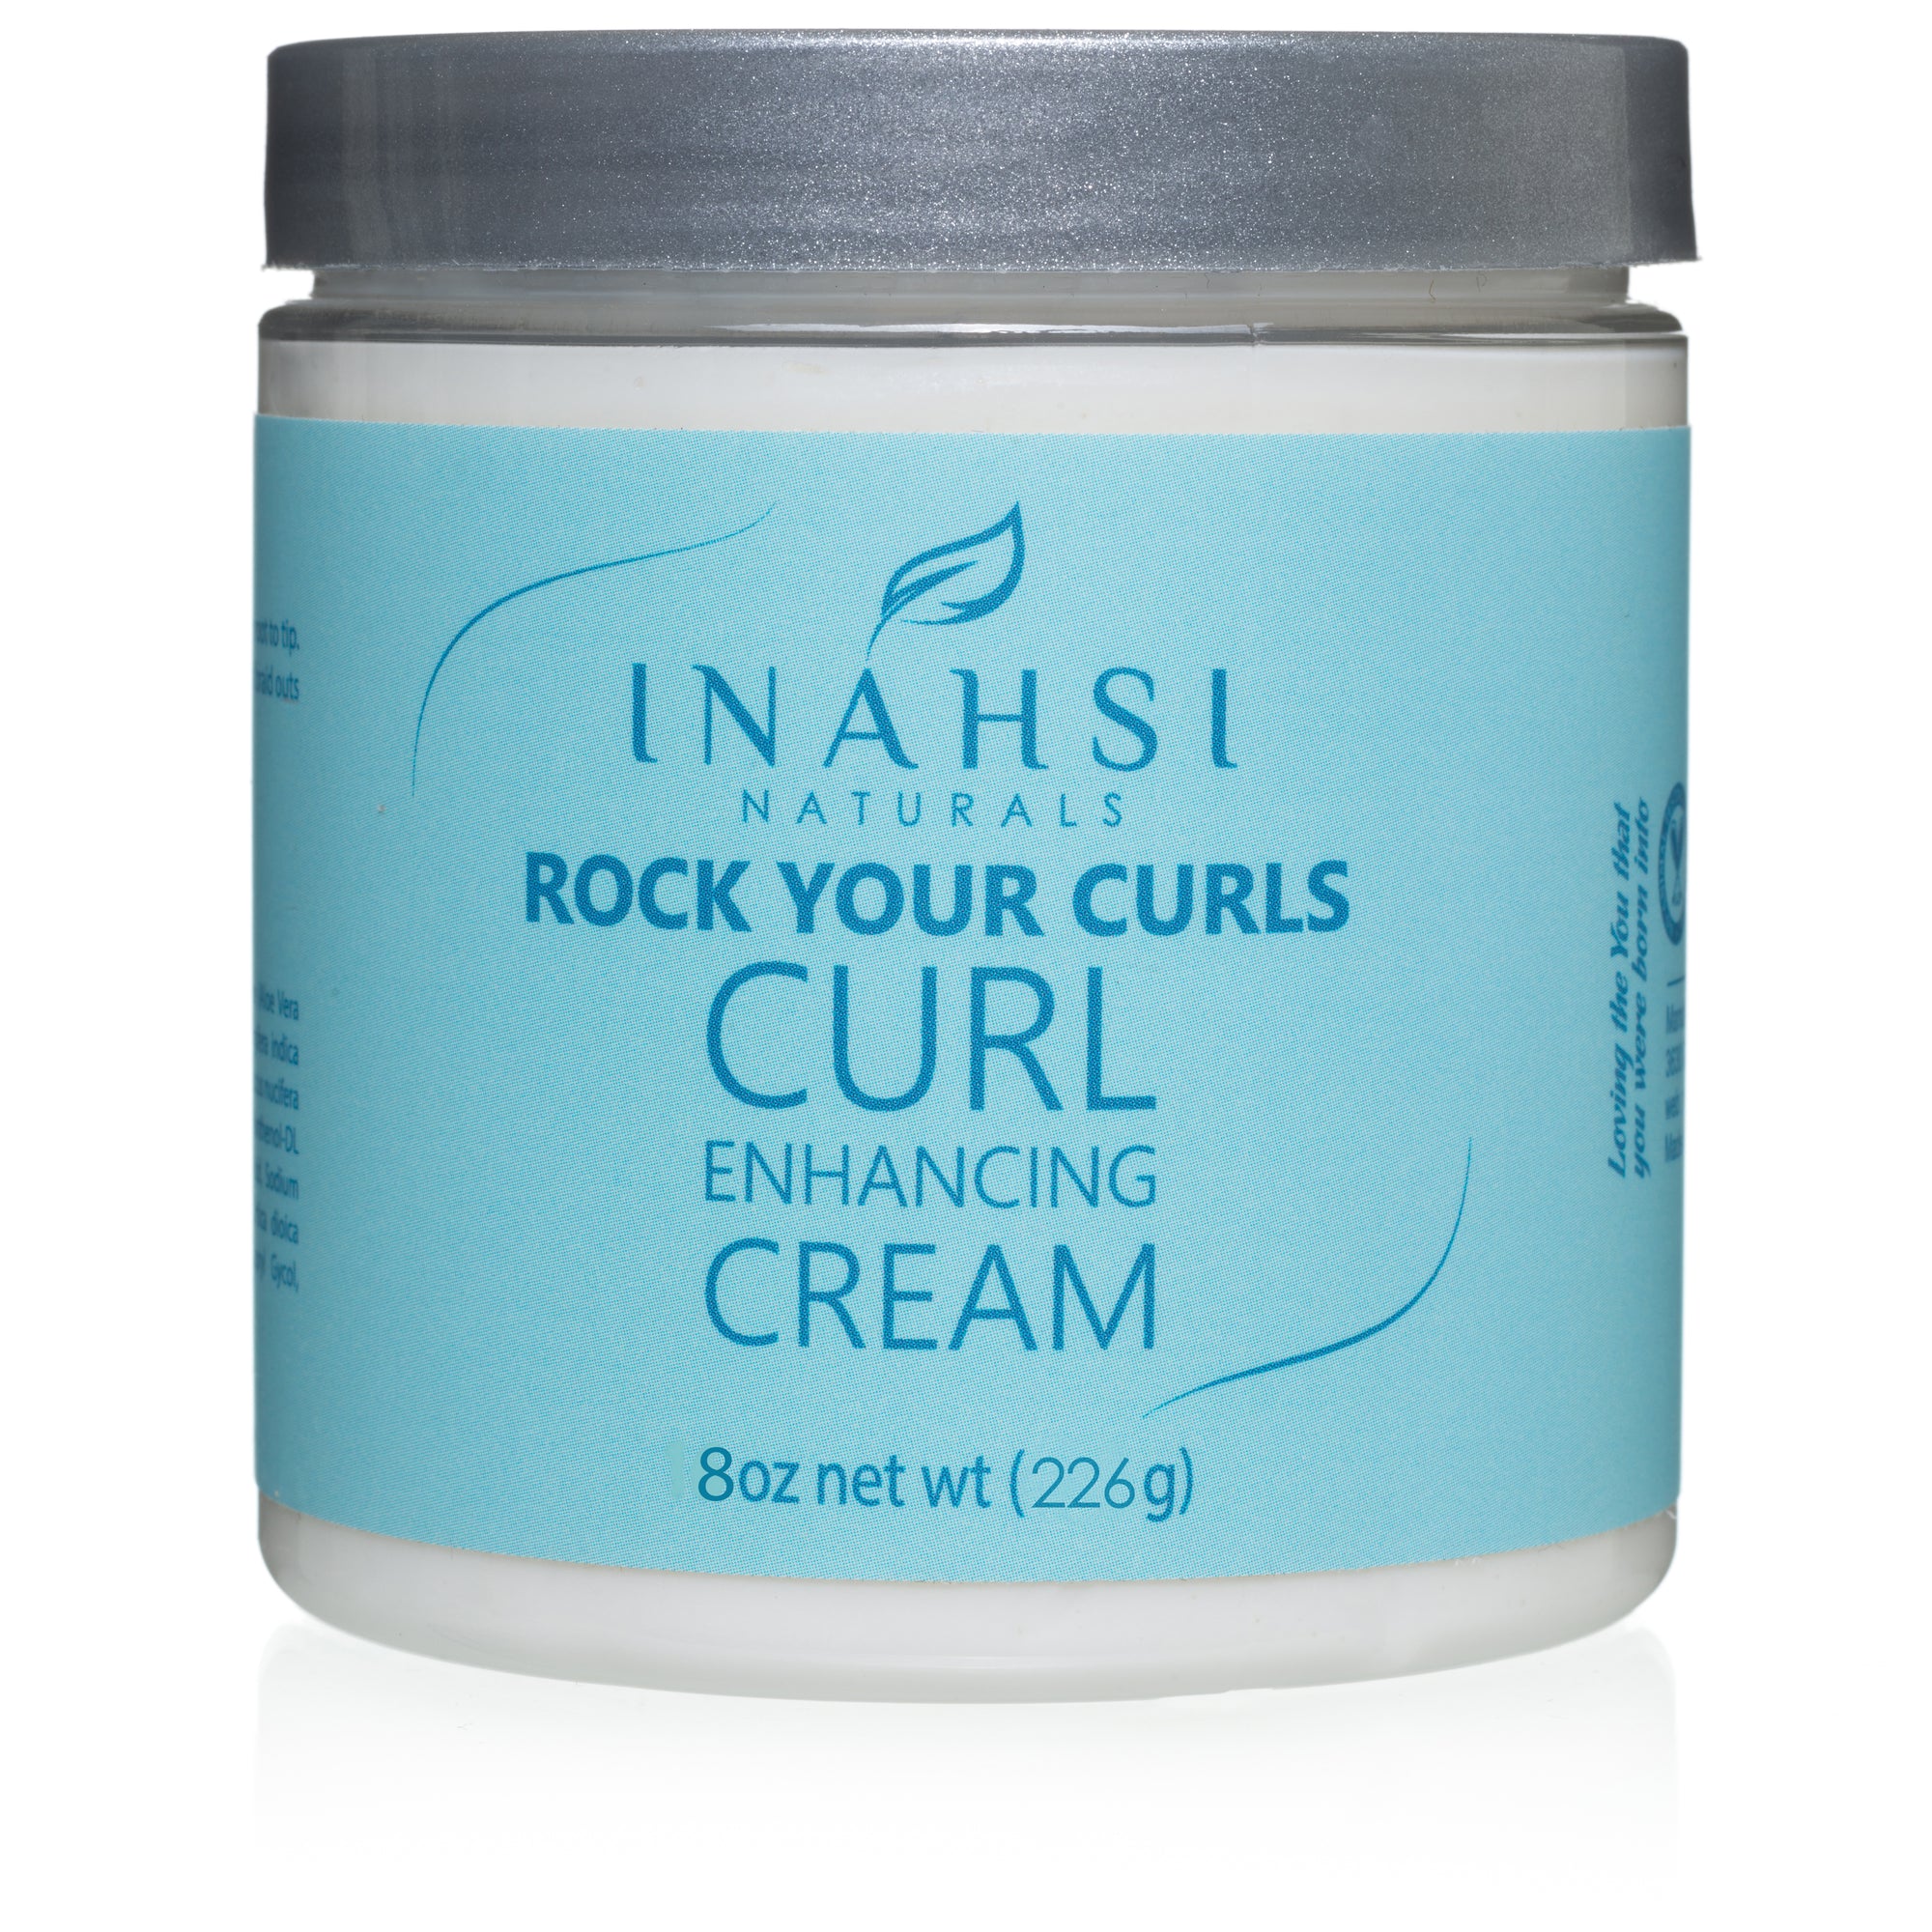 Inahsi Naturals Rock Your Curls Curl Enhancing Cream - Shop Now at Curl Warehouse